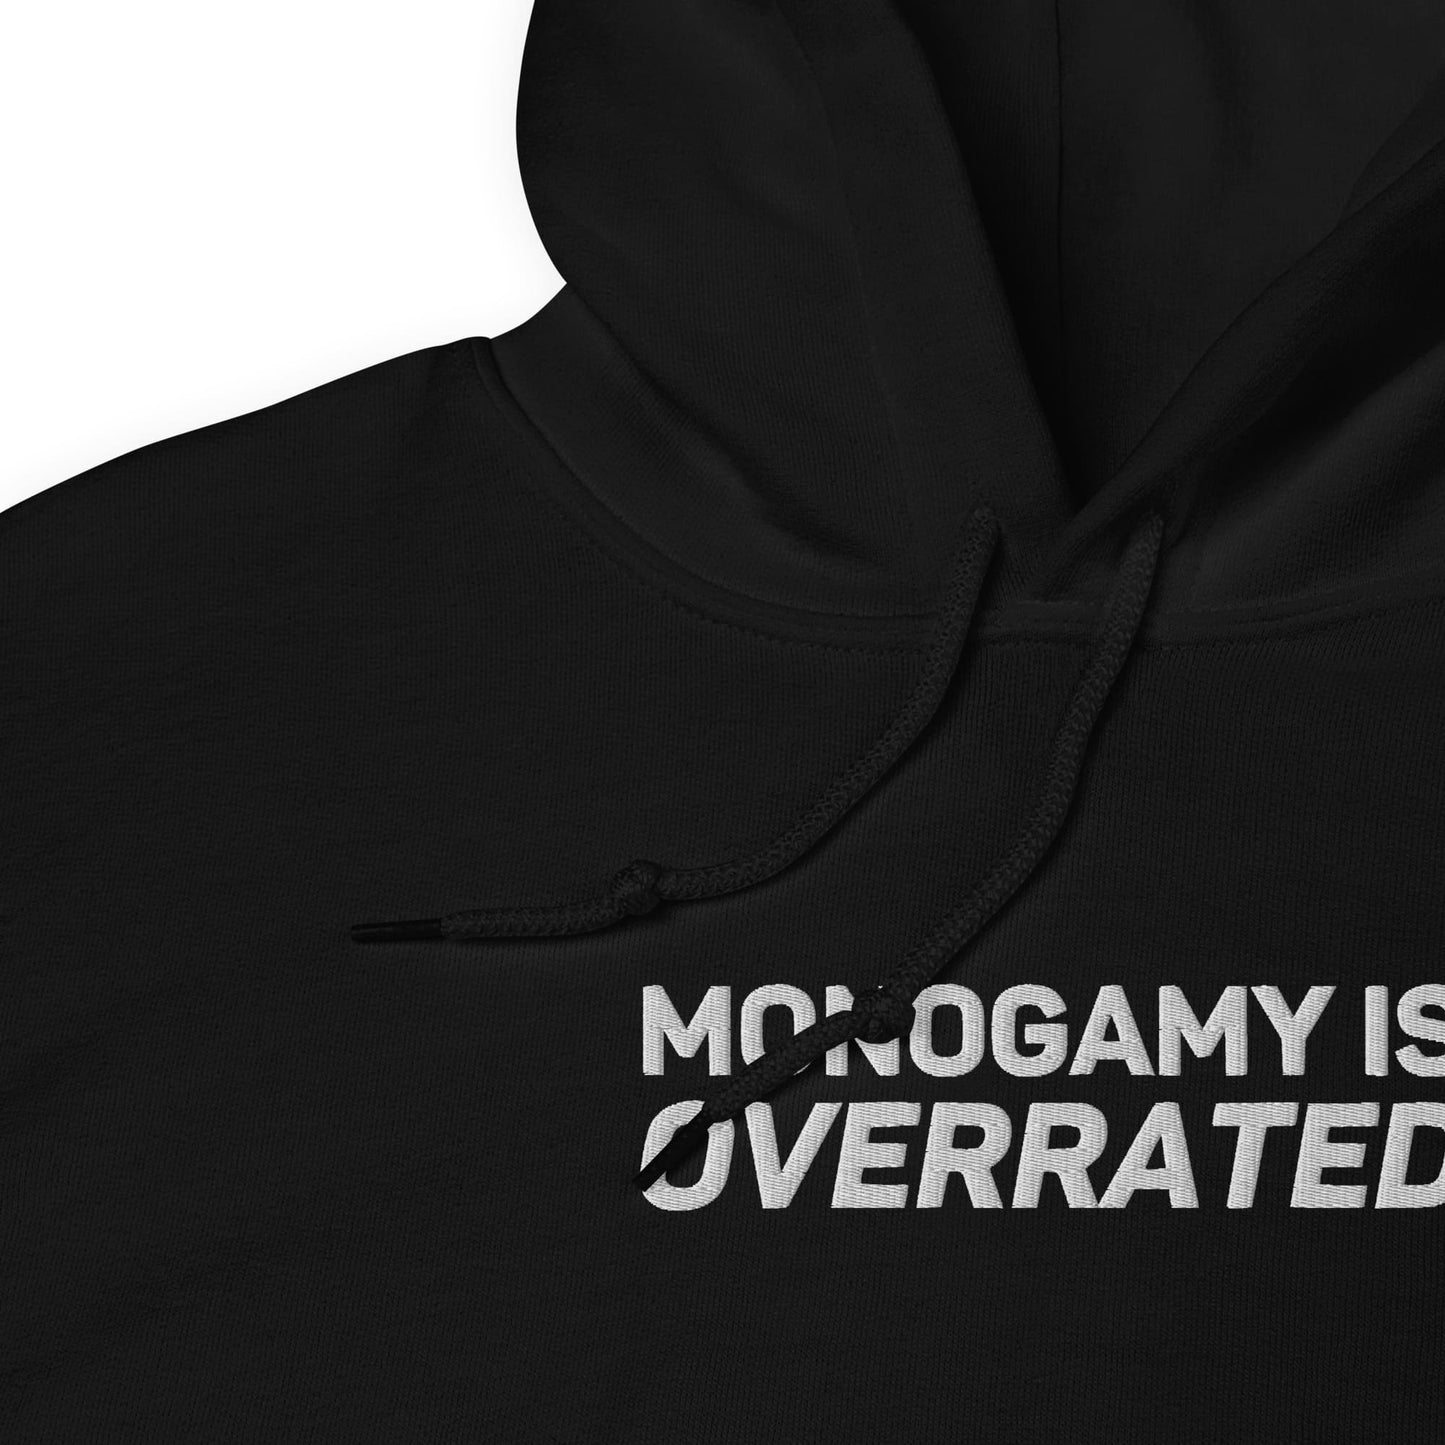 polyamory hoodie, statement polyamorous pride embroidered hooded sweatshirt, detail